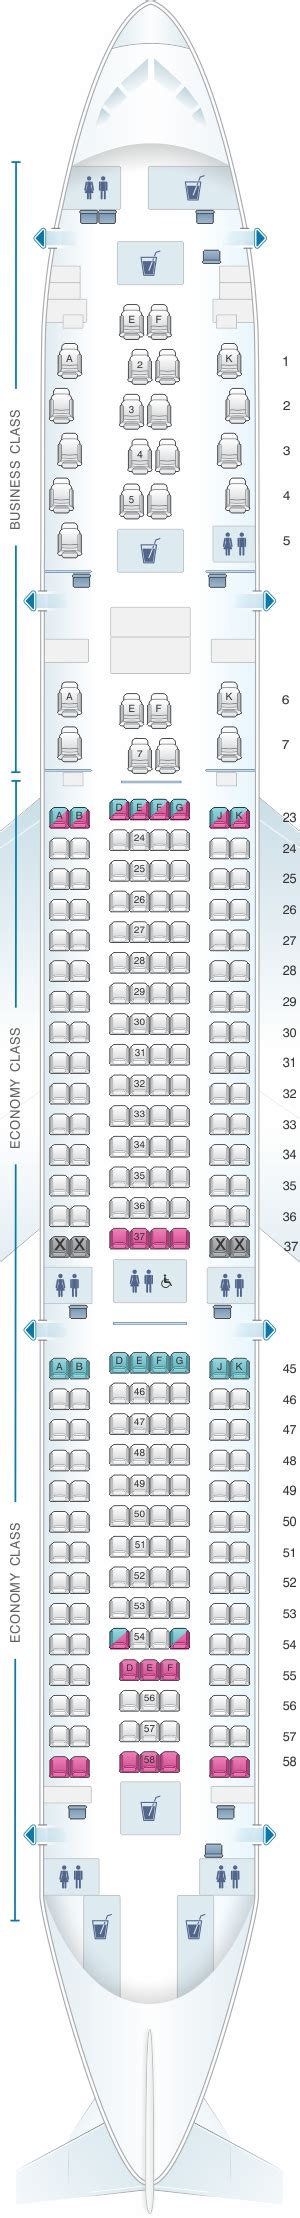 Qantas A380 Seat Map